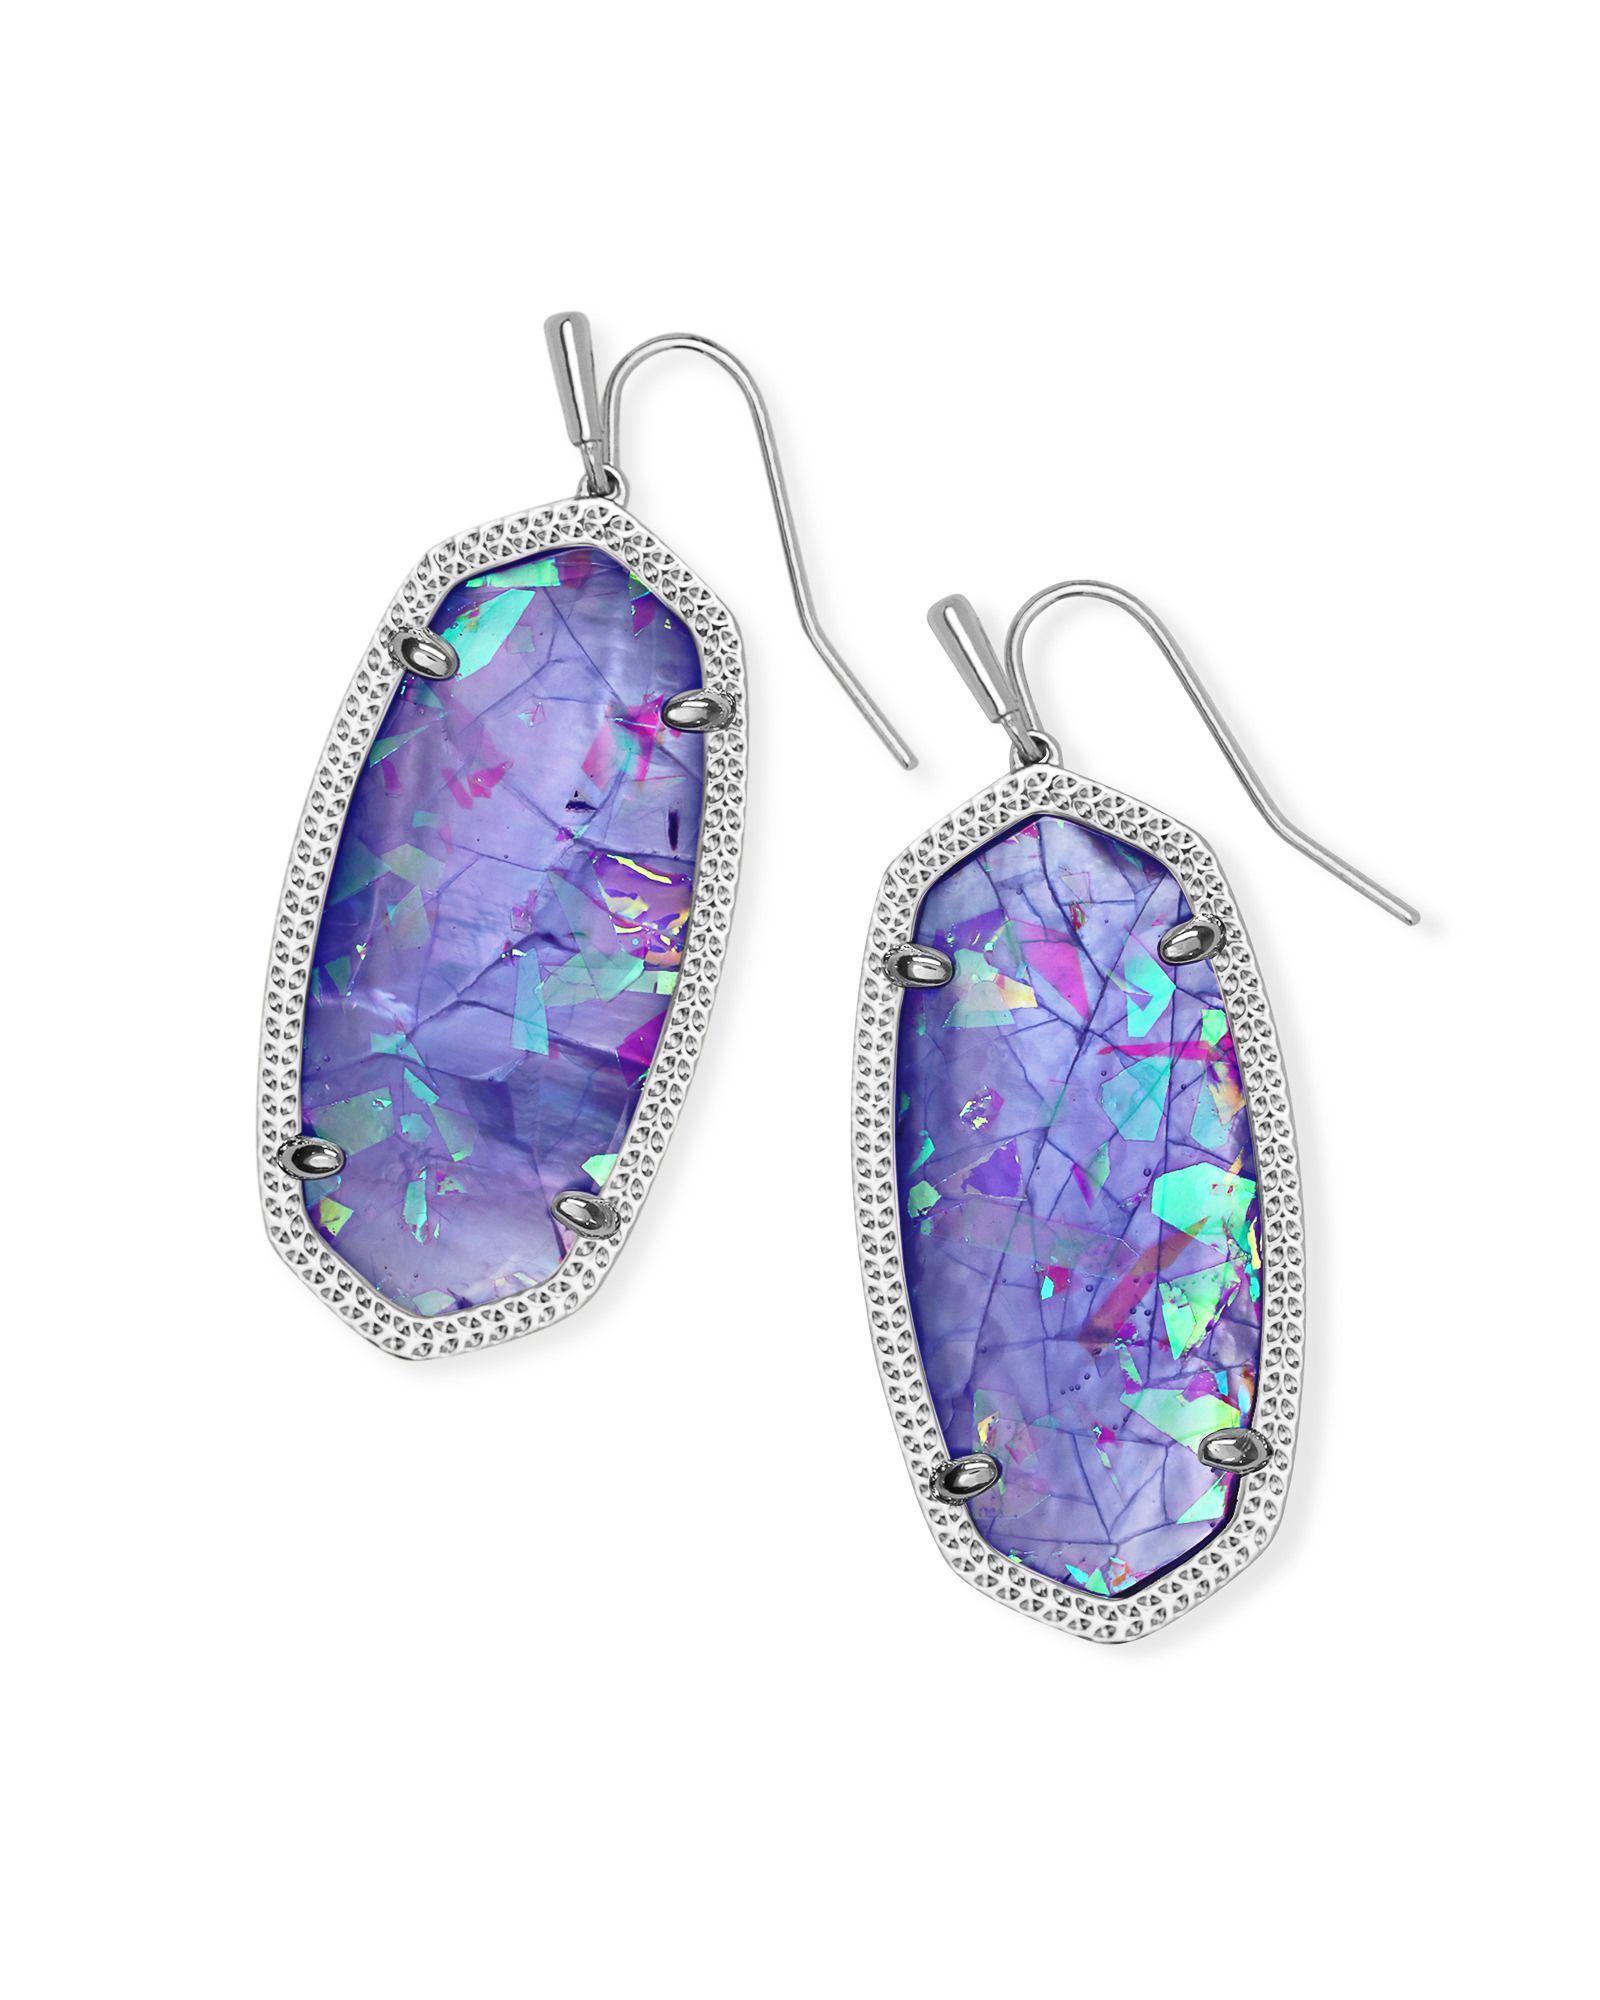 Elle Silver Drop Earrings in Iridescent Lilac Illusion | Kendra Scott